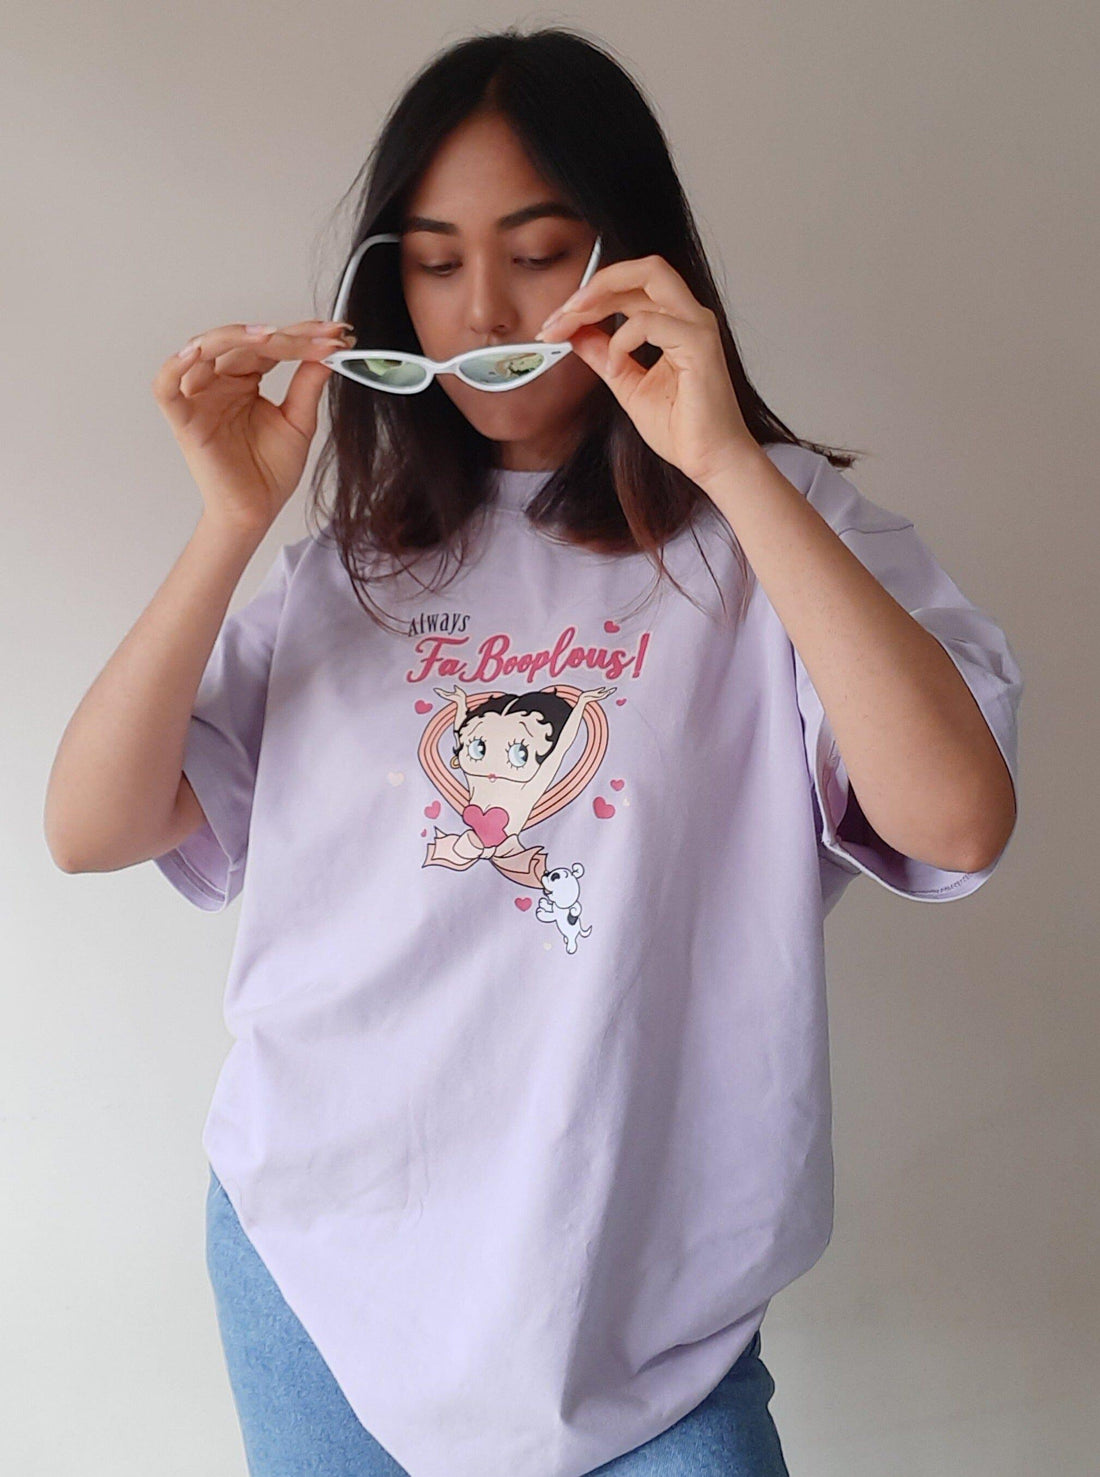 Betty Boop Always Favbooplous Tee (T-shirt) T-shirt Burger Bae S 